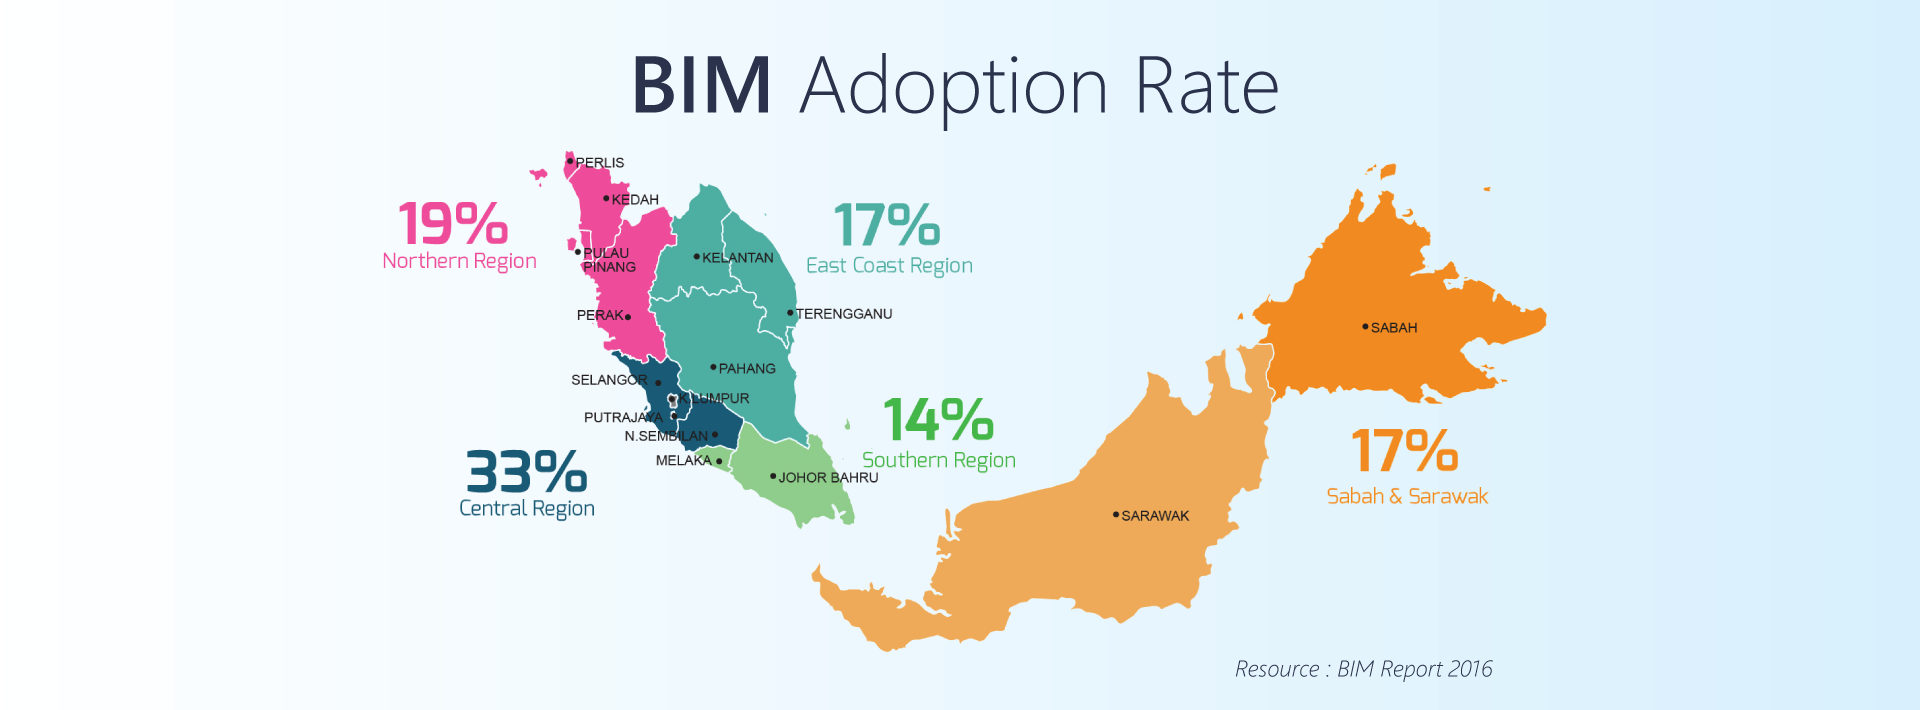 BIM adoption rate graph by region